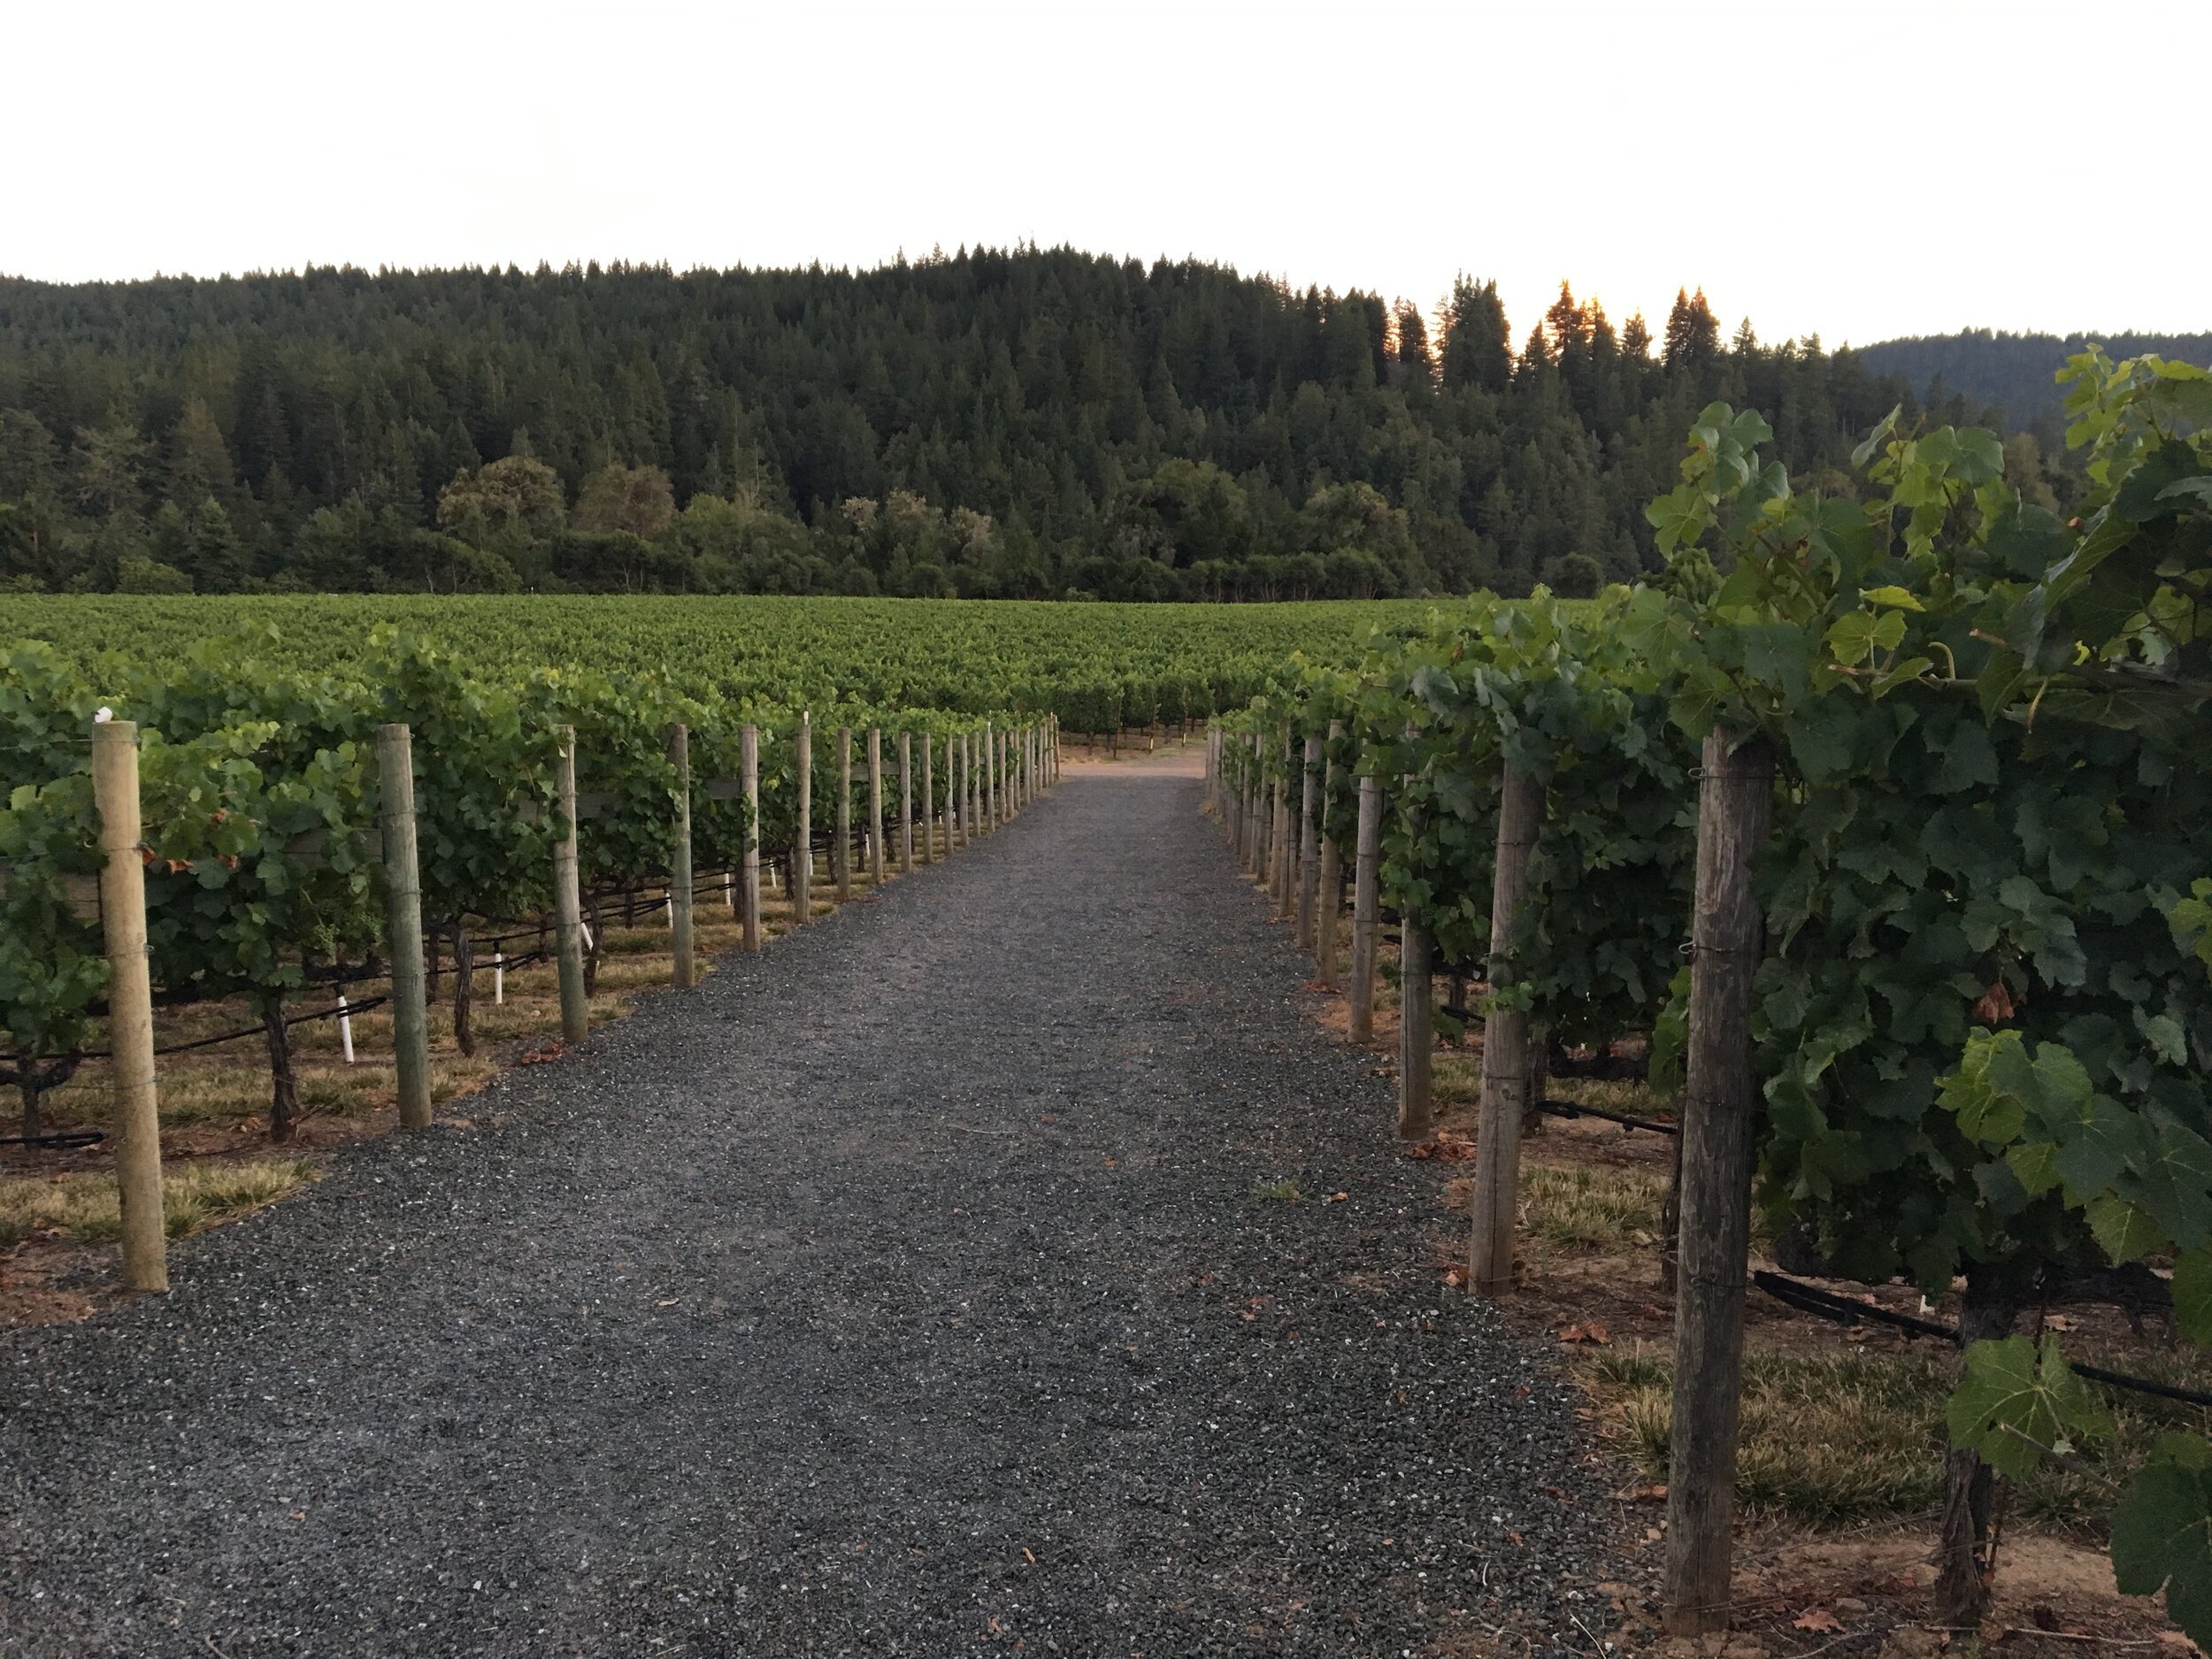 Road leading into vineyard at dusk (Copy)